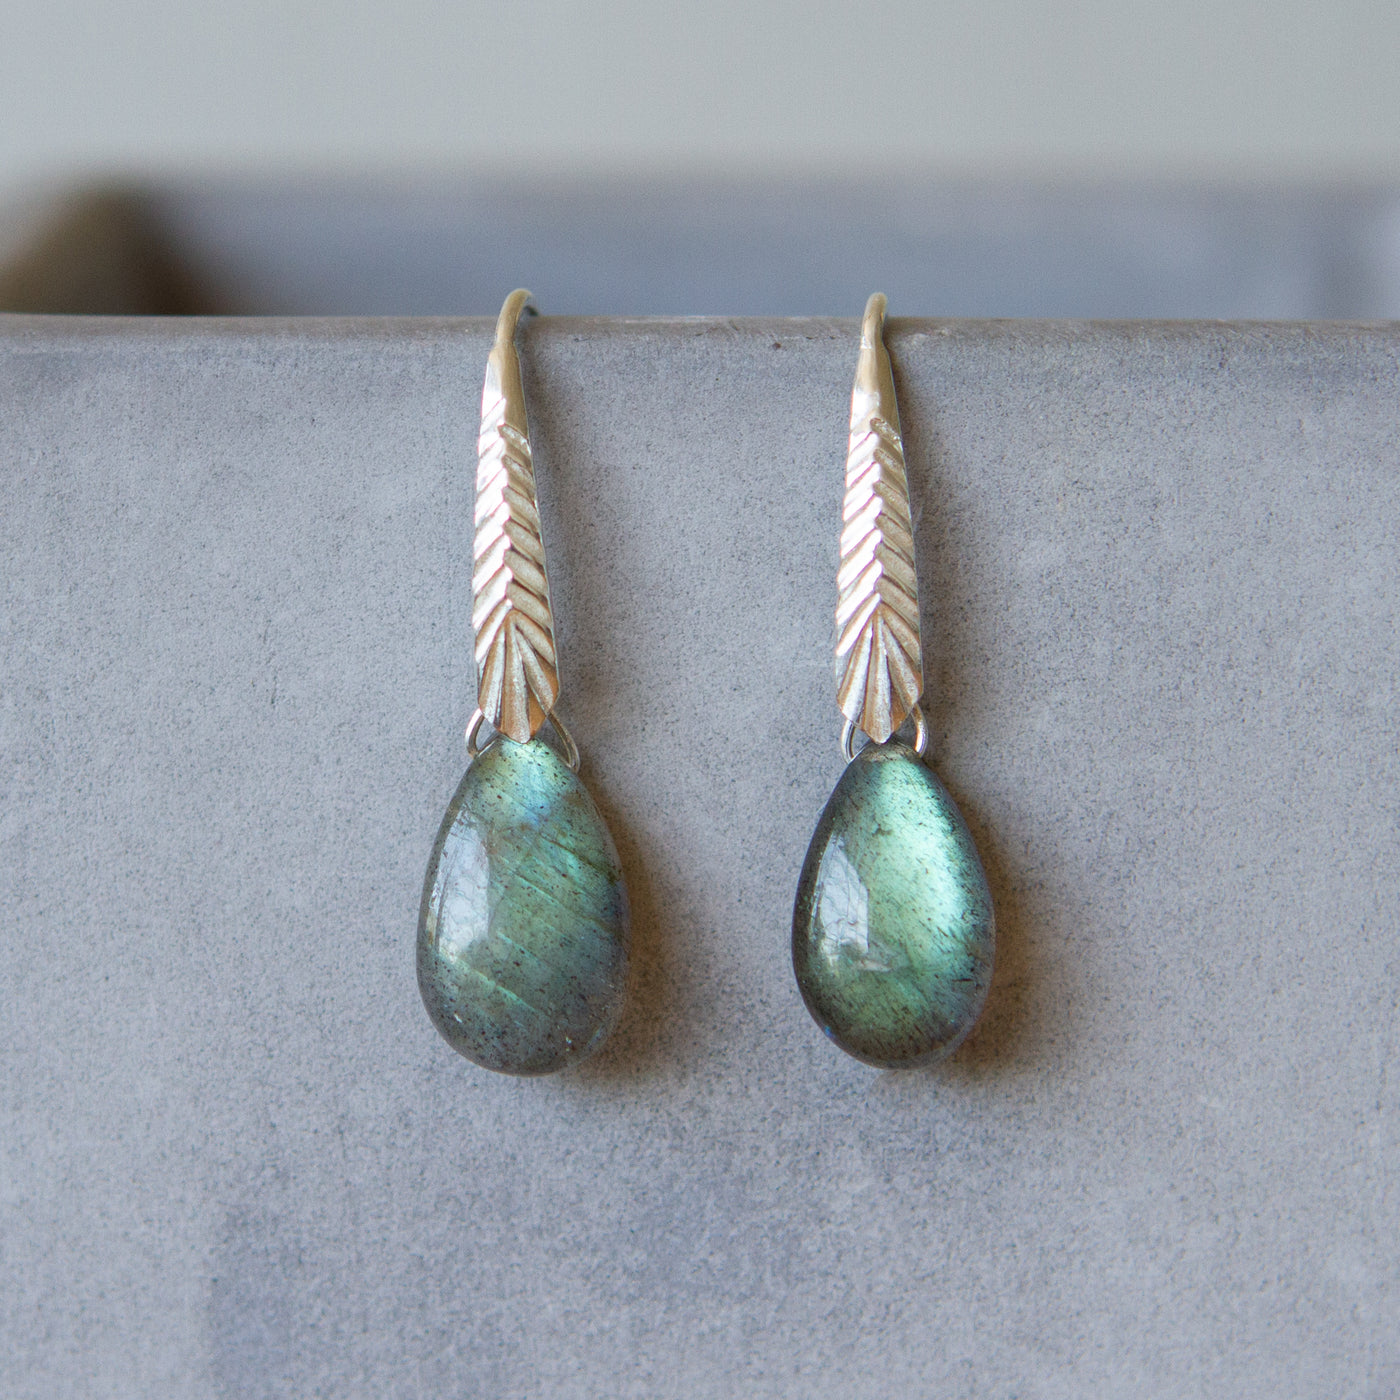 sterling silver Herringbone dangle earrings with pear shape smooth labradorite drops